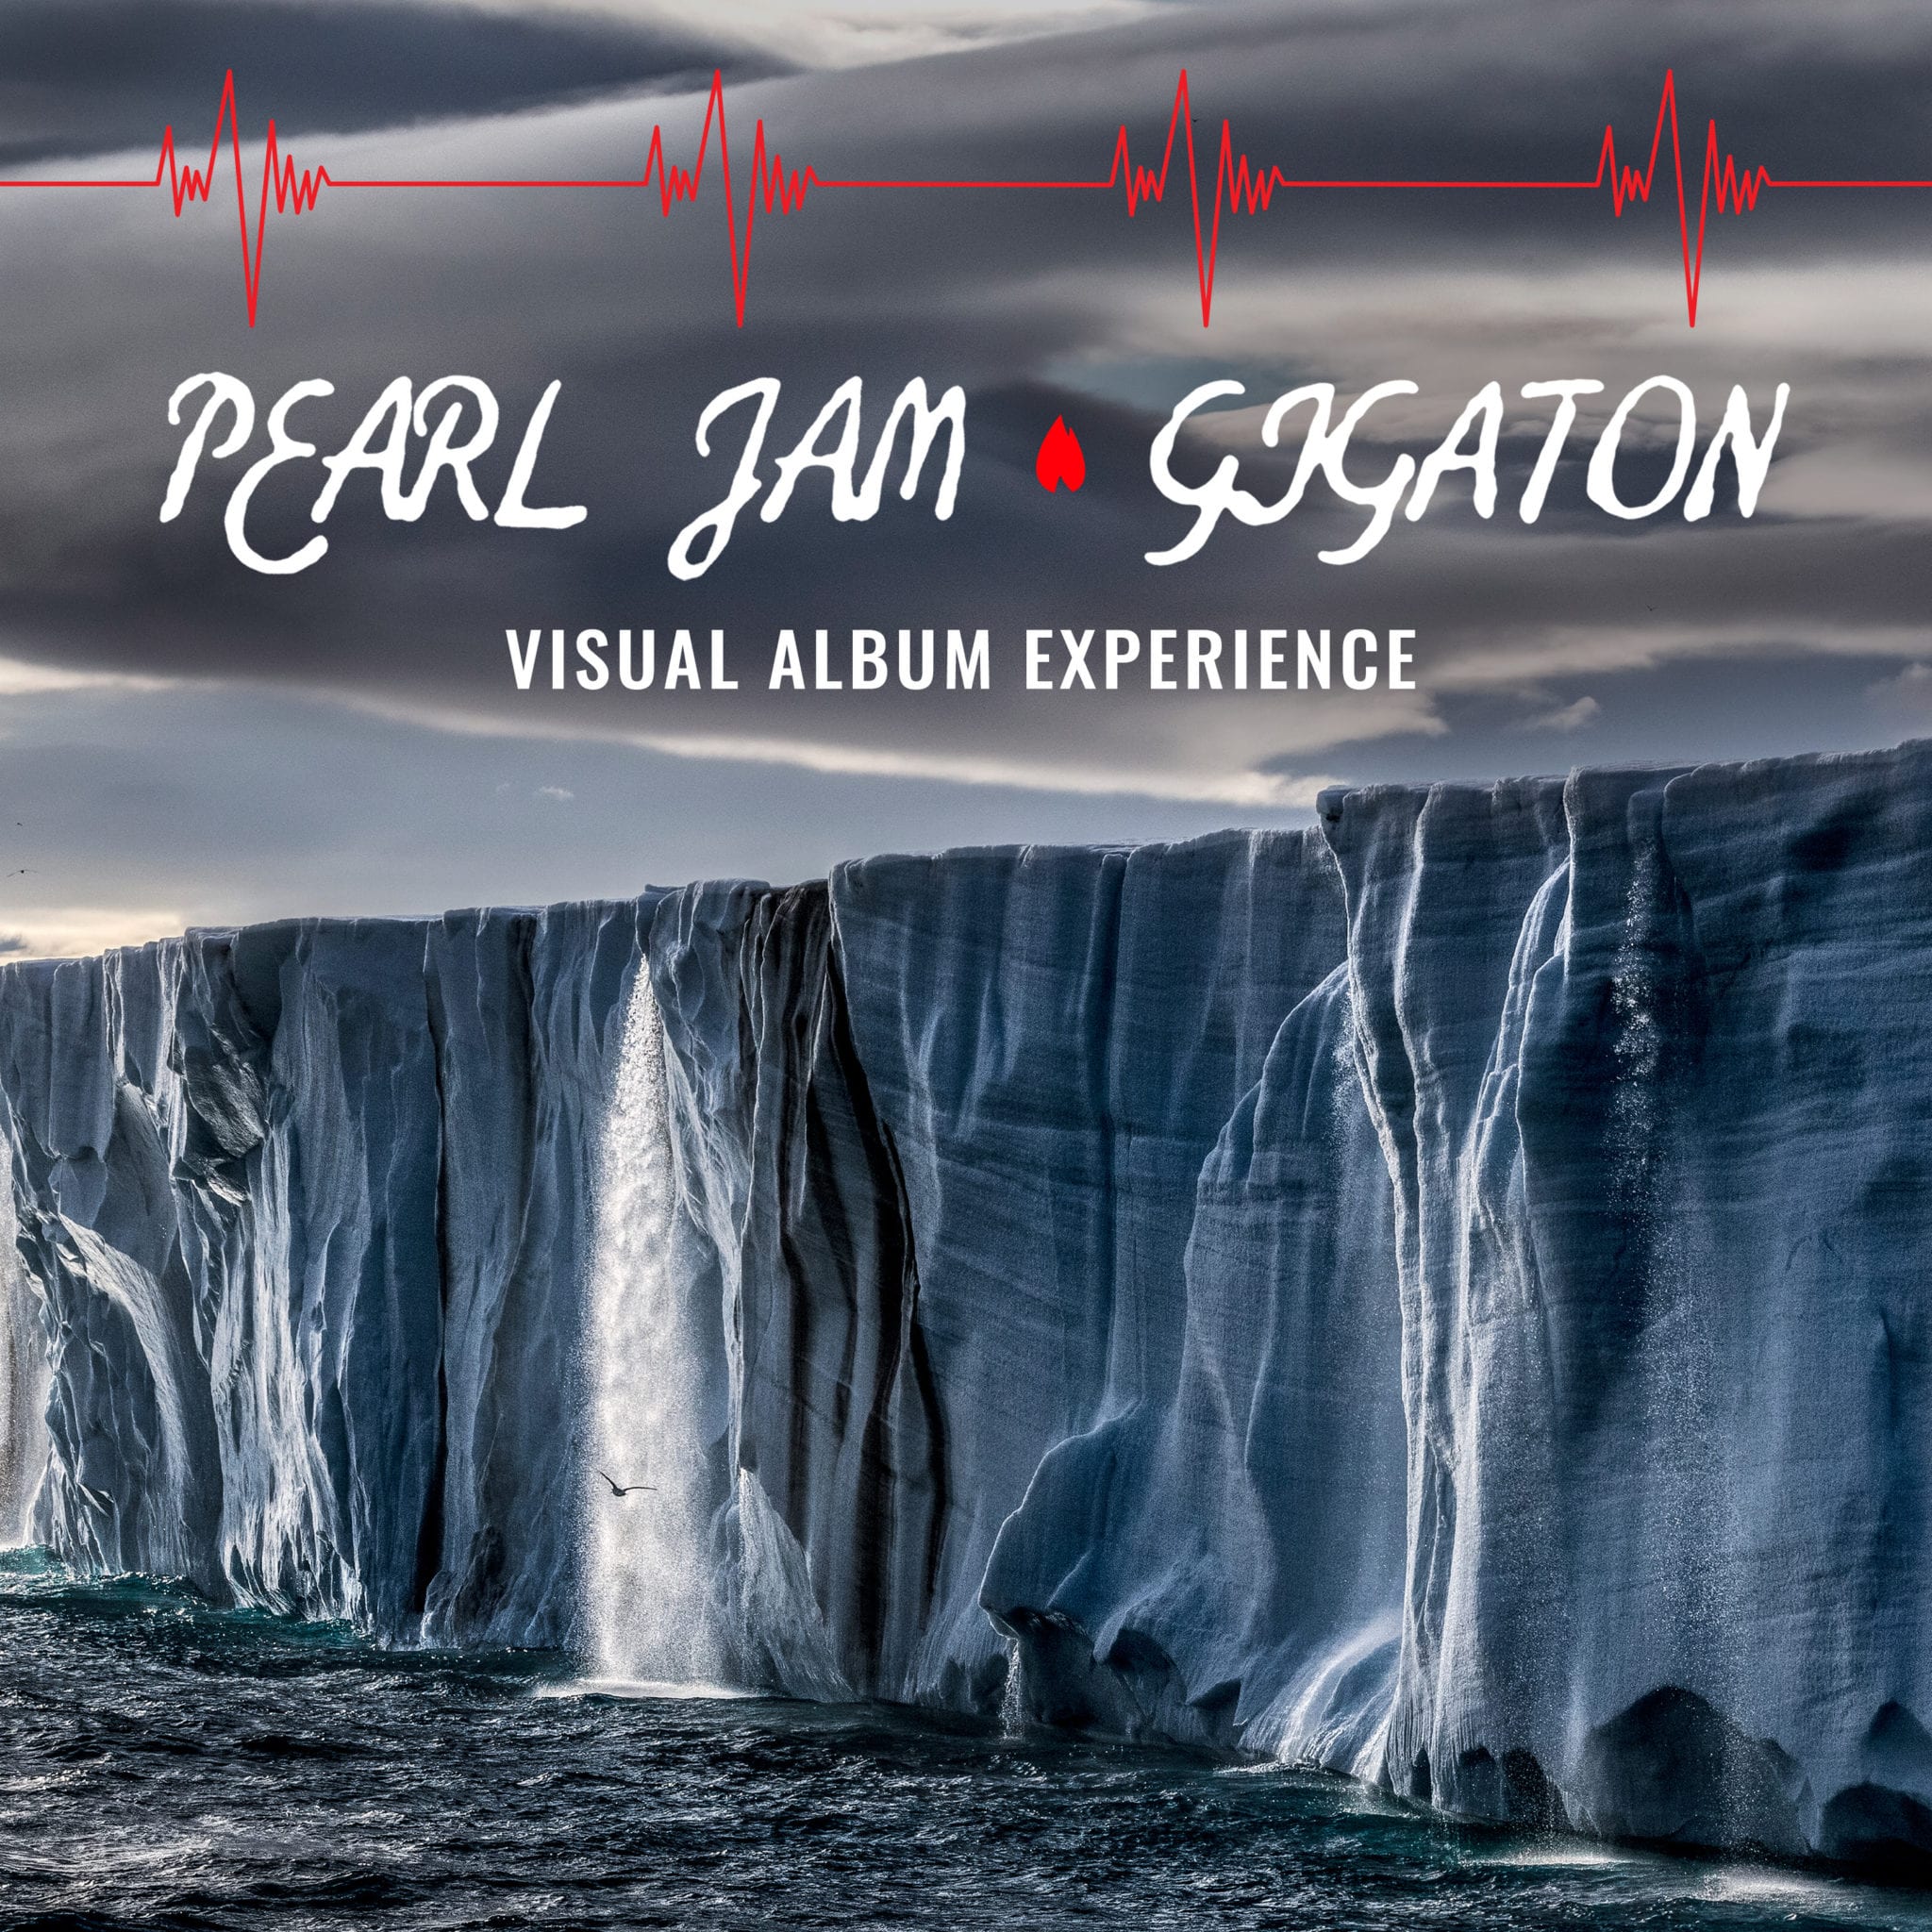 Pearl Jam Announces Gigaton Visual Experience On Apple Tv Live Music Blog